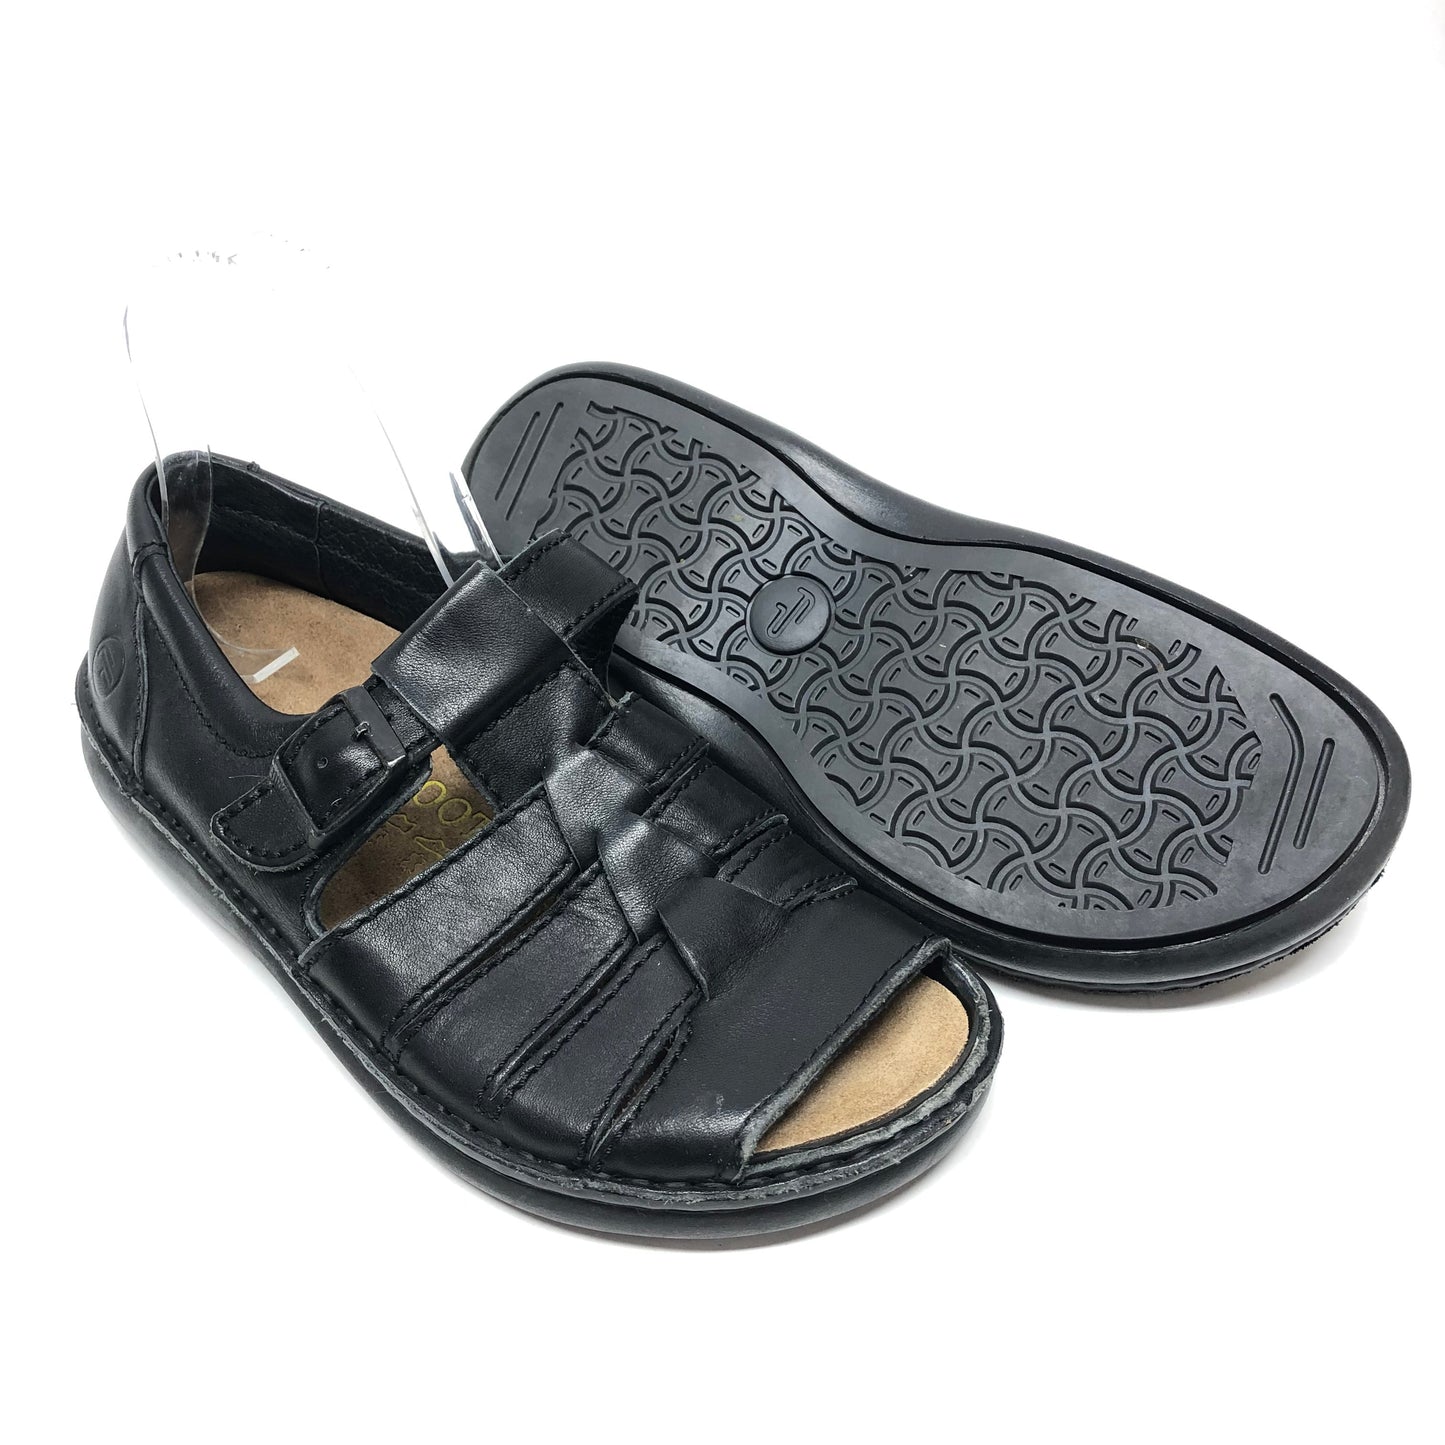 Black Shoes Flats Birkenstock, Size 8